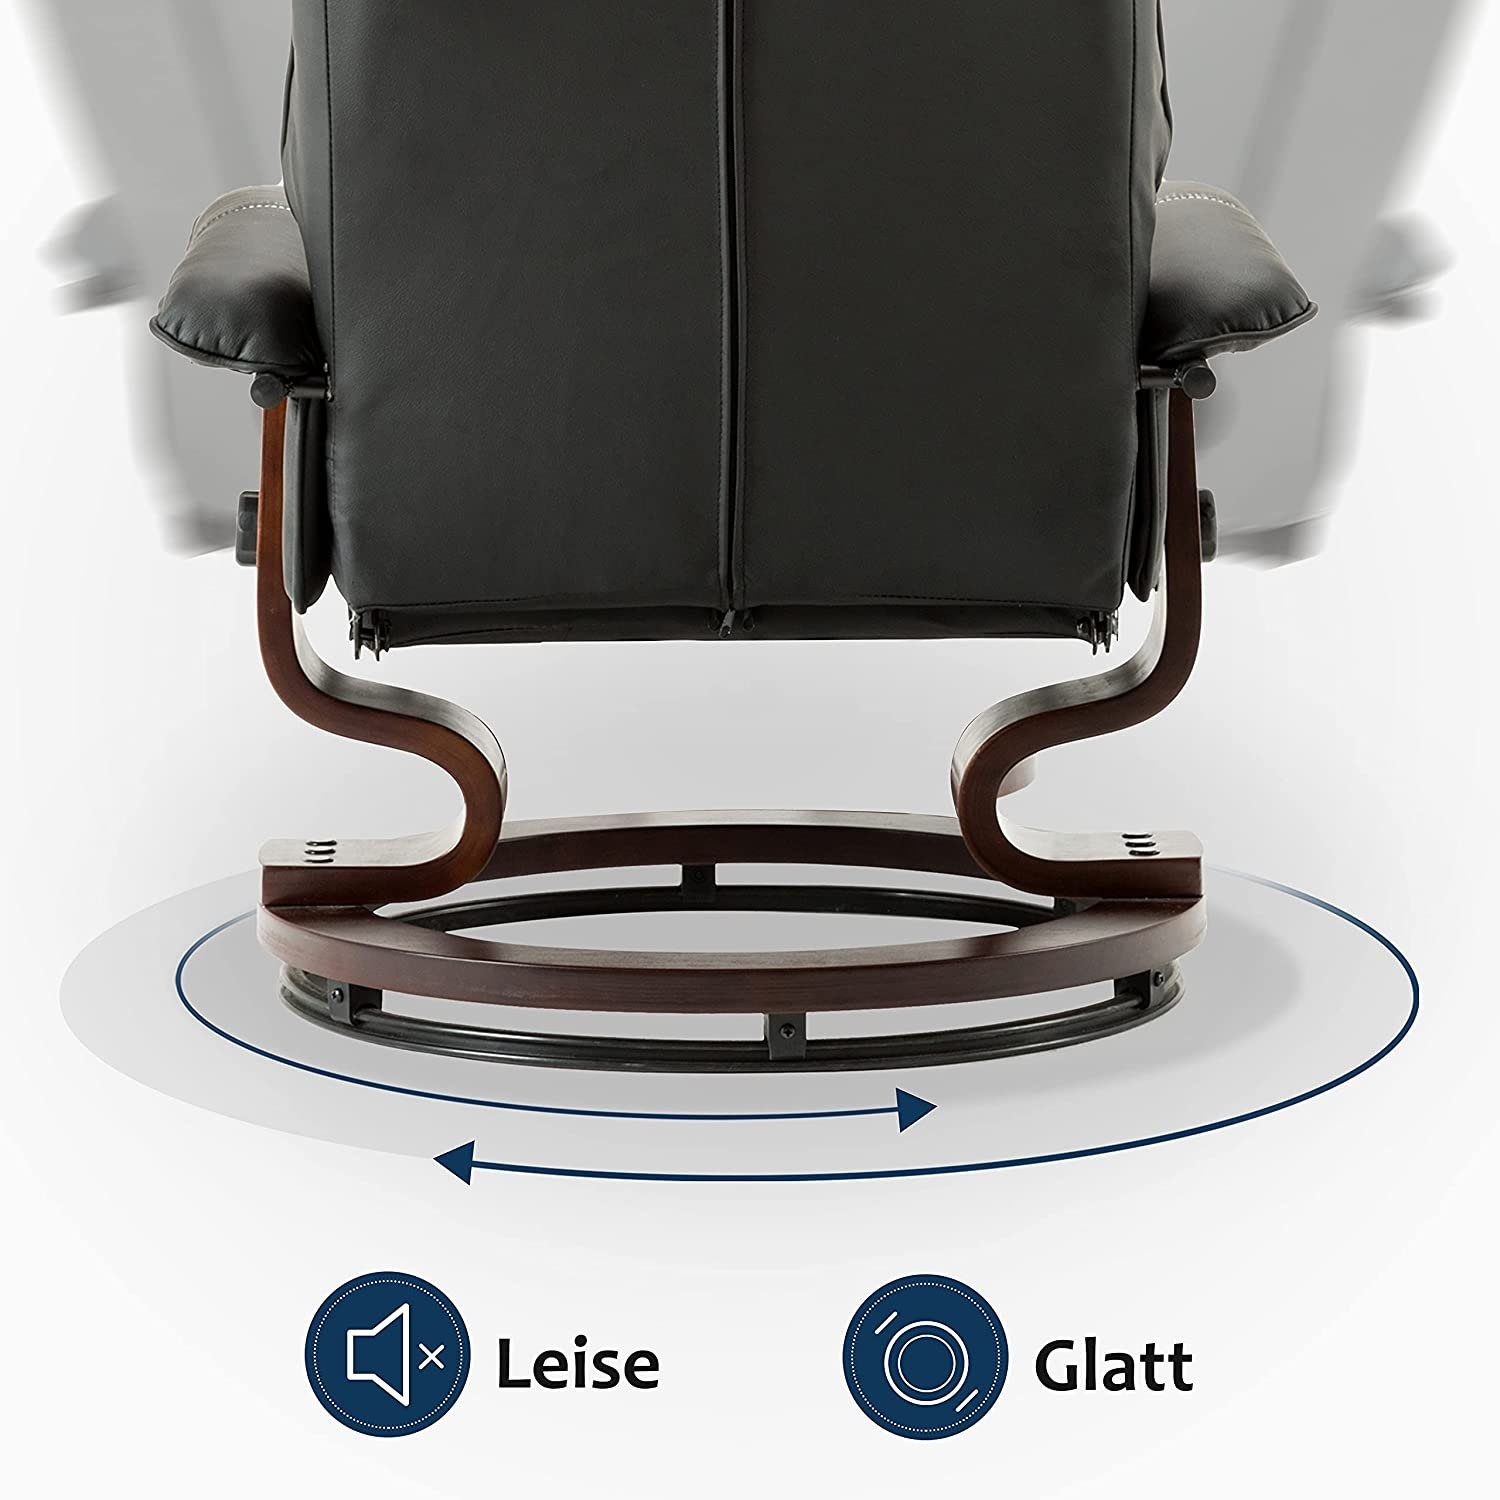 MCombo TV-Sessel MCombo Relaxsessel mit Liegefunktion, 9019, 360°drehbarer Hocker mit Fernsehsessel Schwarz-Kunstleder mit Hocker